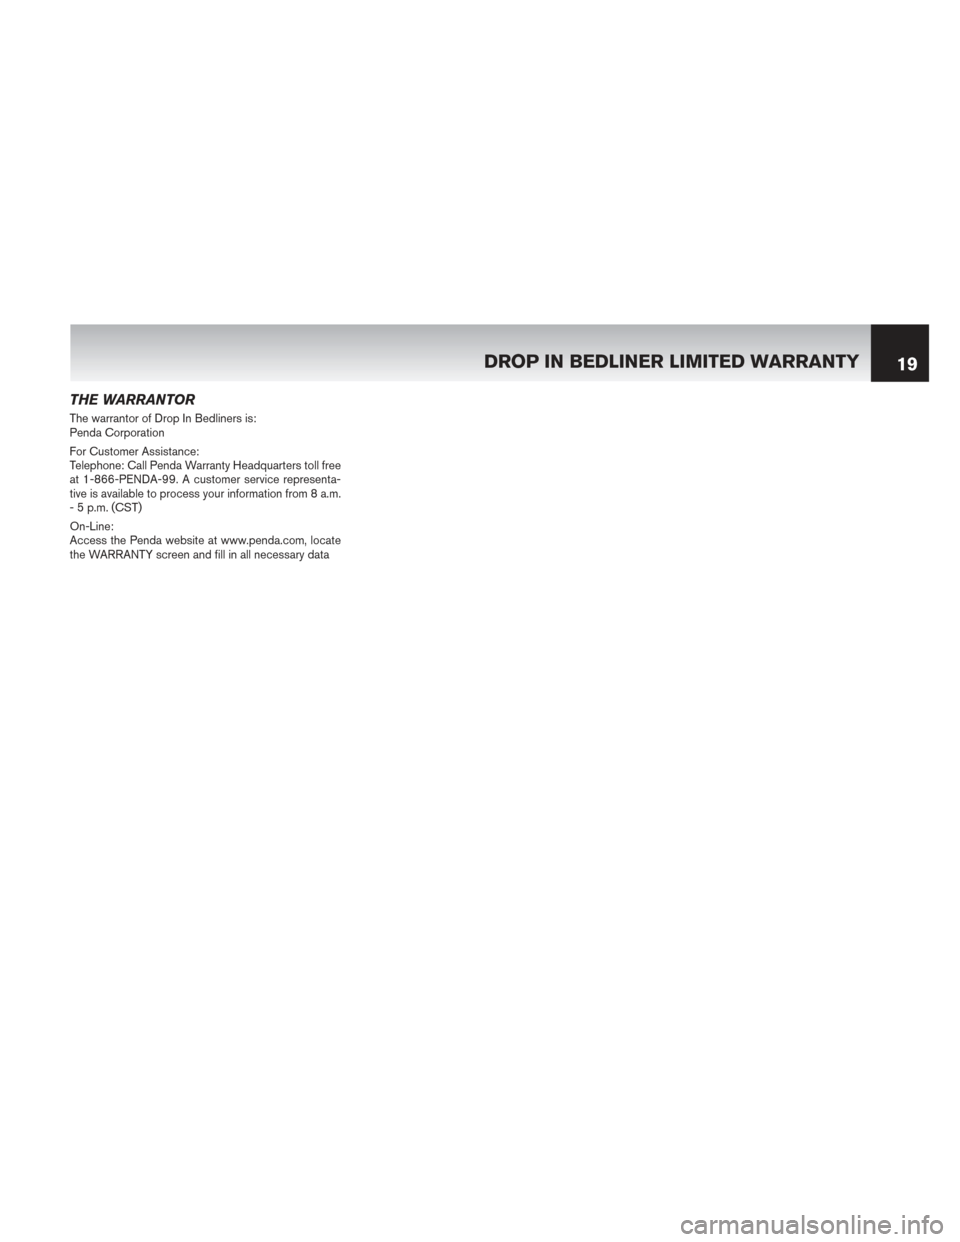 NISSAN PATHFINDER HYBRID 2014 R52 / 4.G Warranty Booklet THE WARRANTOR
The warrantor of Drop In Bedliners is:
Penda Corporation
For Customer Assistance:
Telephone: Call Penda Warranty Headquarters toll free
at 1-866-PENDA-99. A customer service representa-
